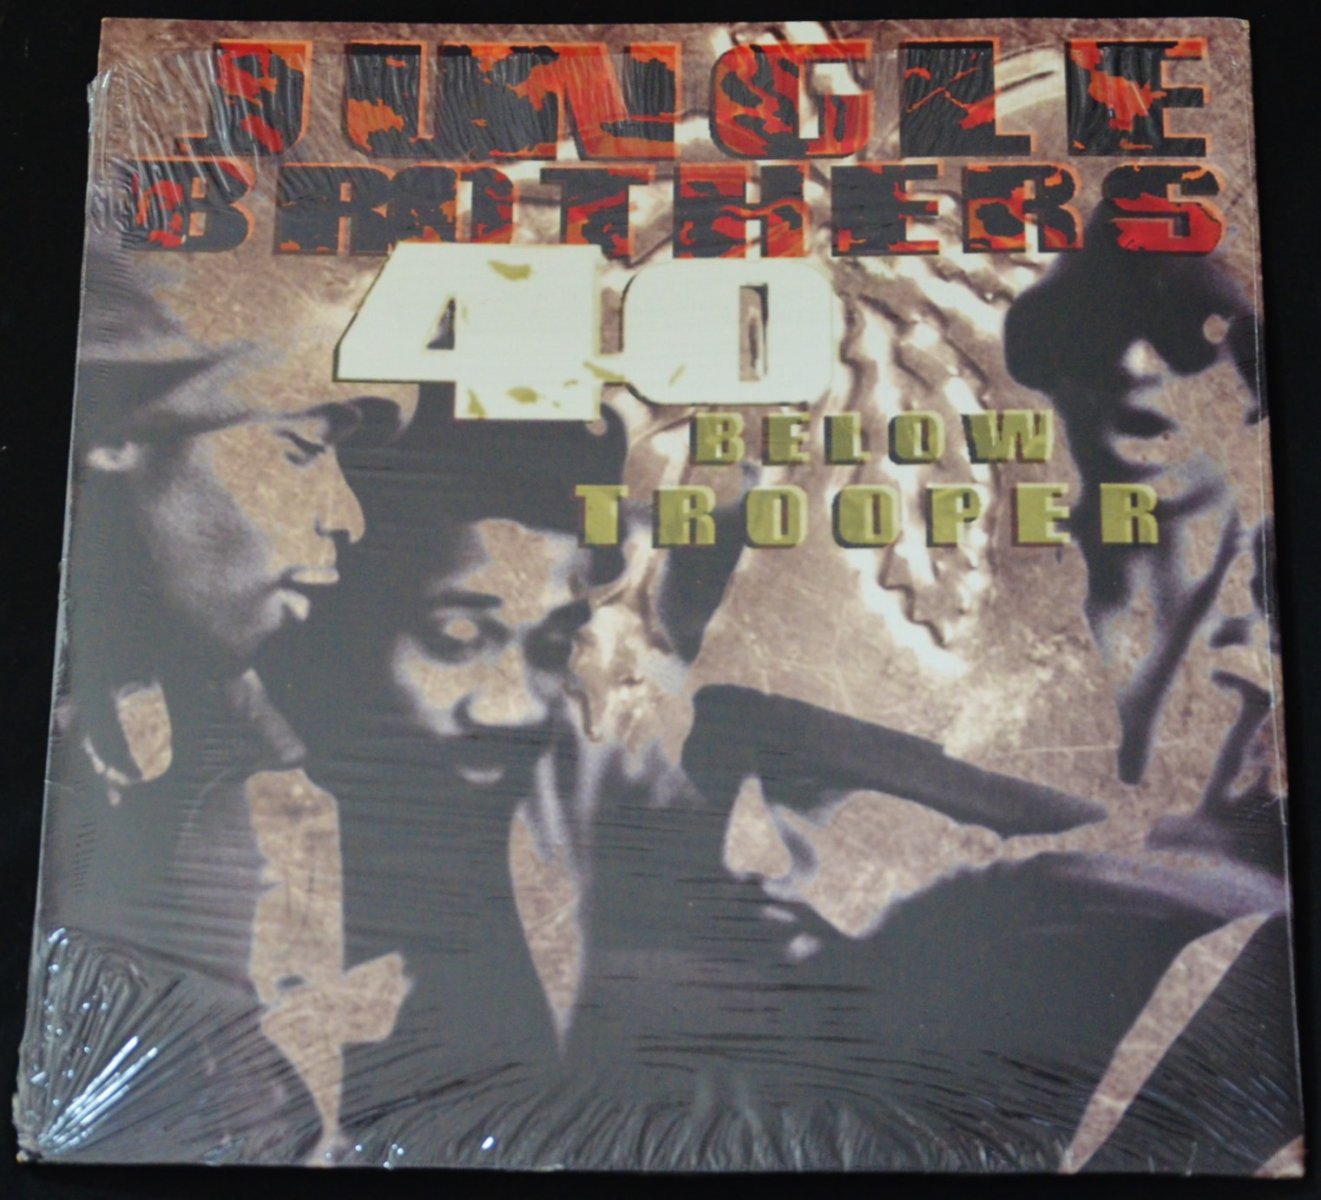 Jungle Brothers - 40 Below Trooper - Warner Bros. Records - 0-40764: :  Music